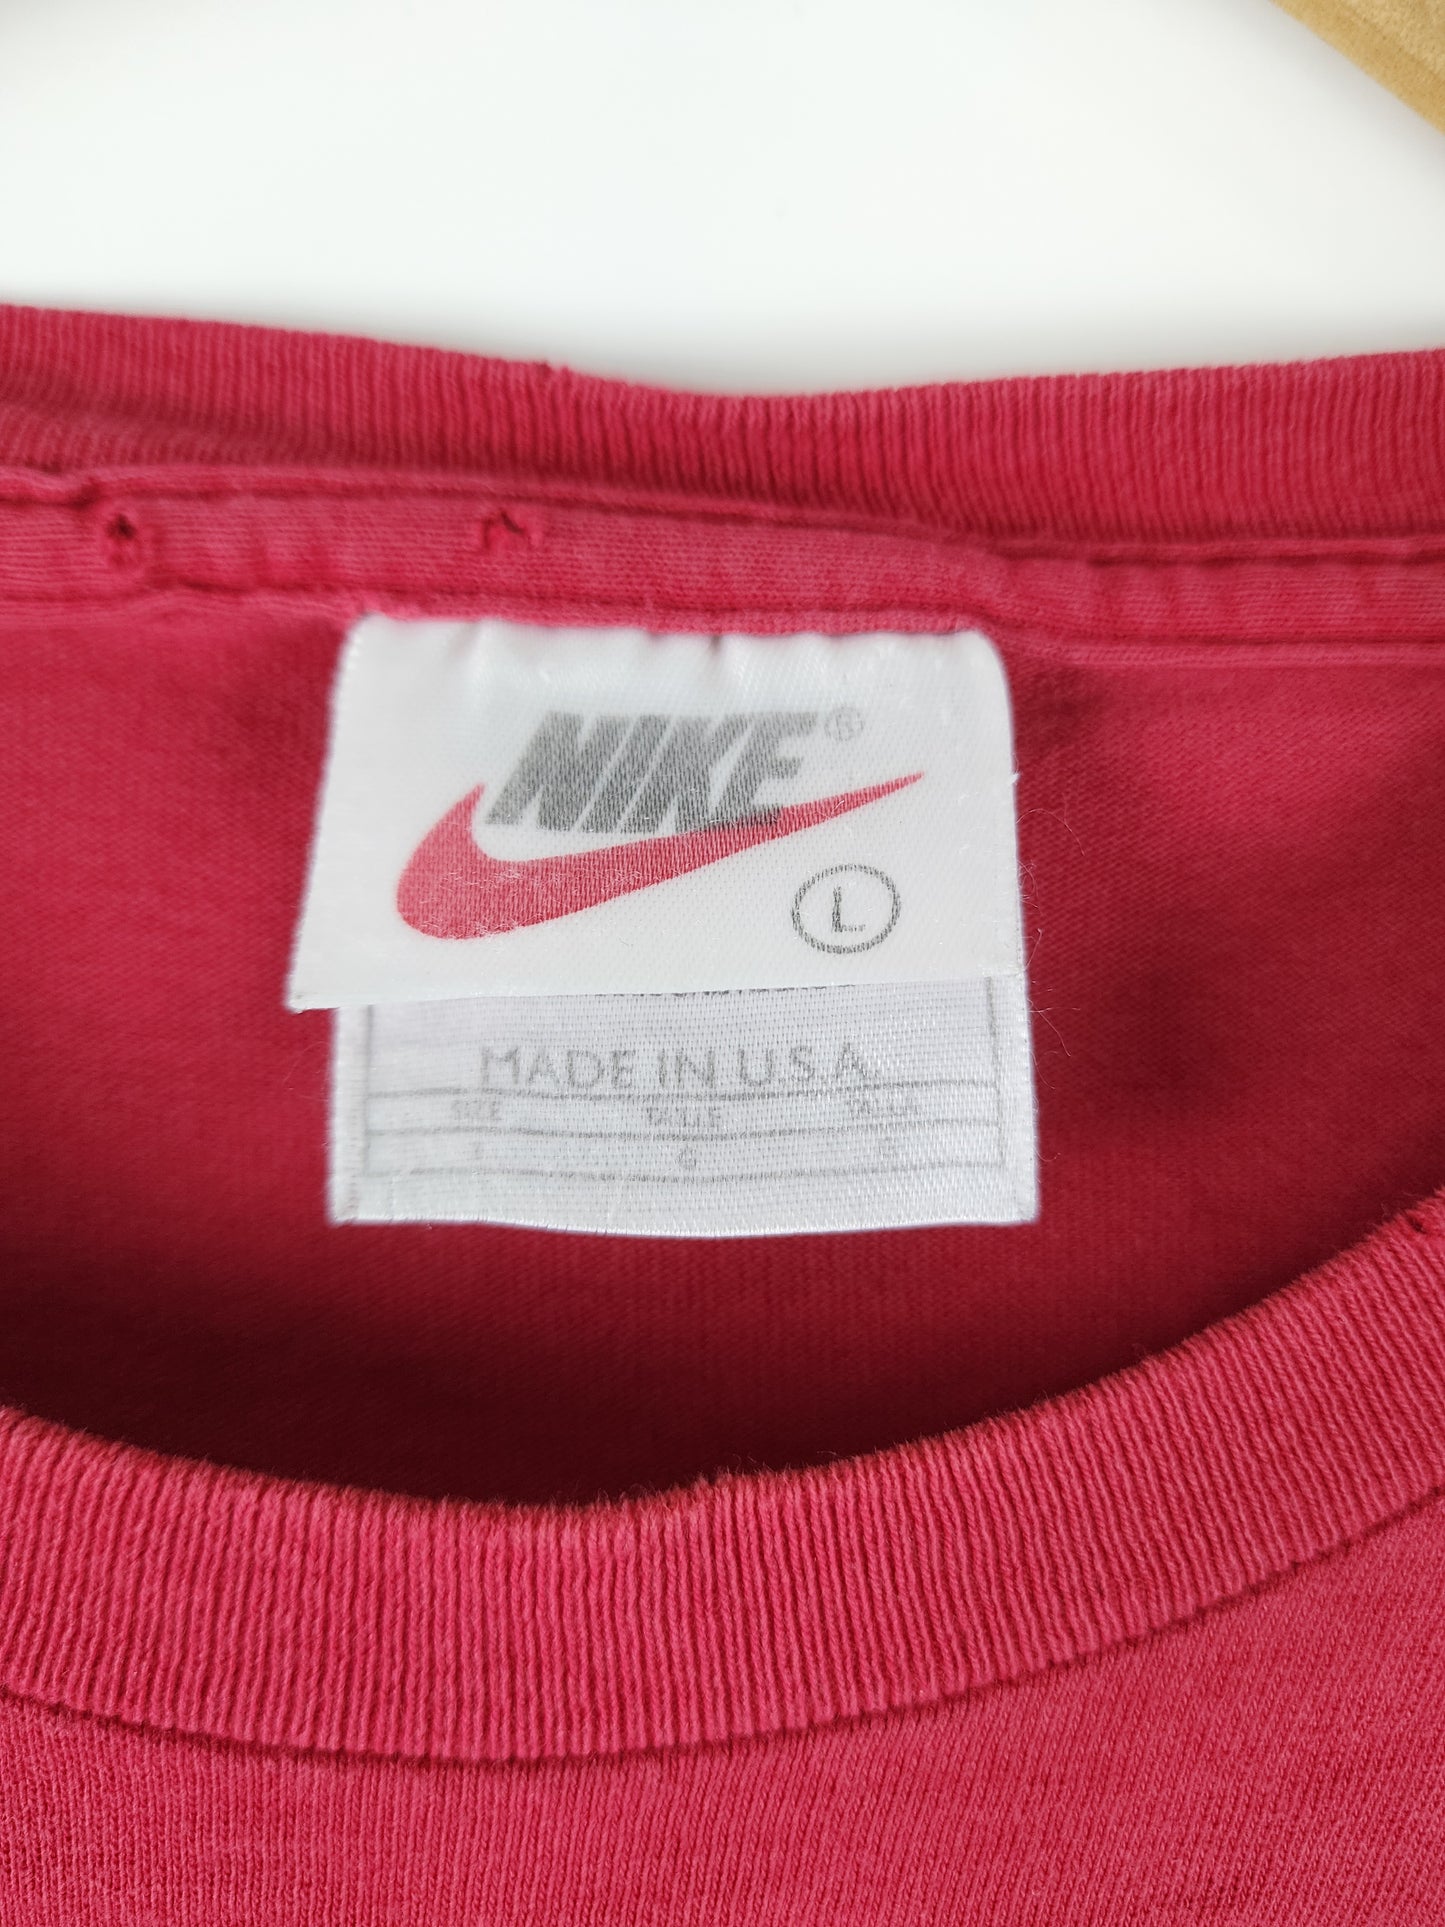 Vintage Nike Miniswoosh 90's tonal logo Made in USA Red T-shirt 